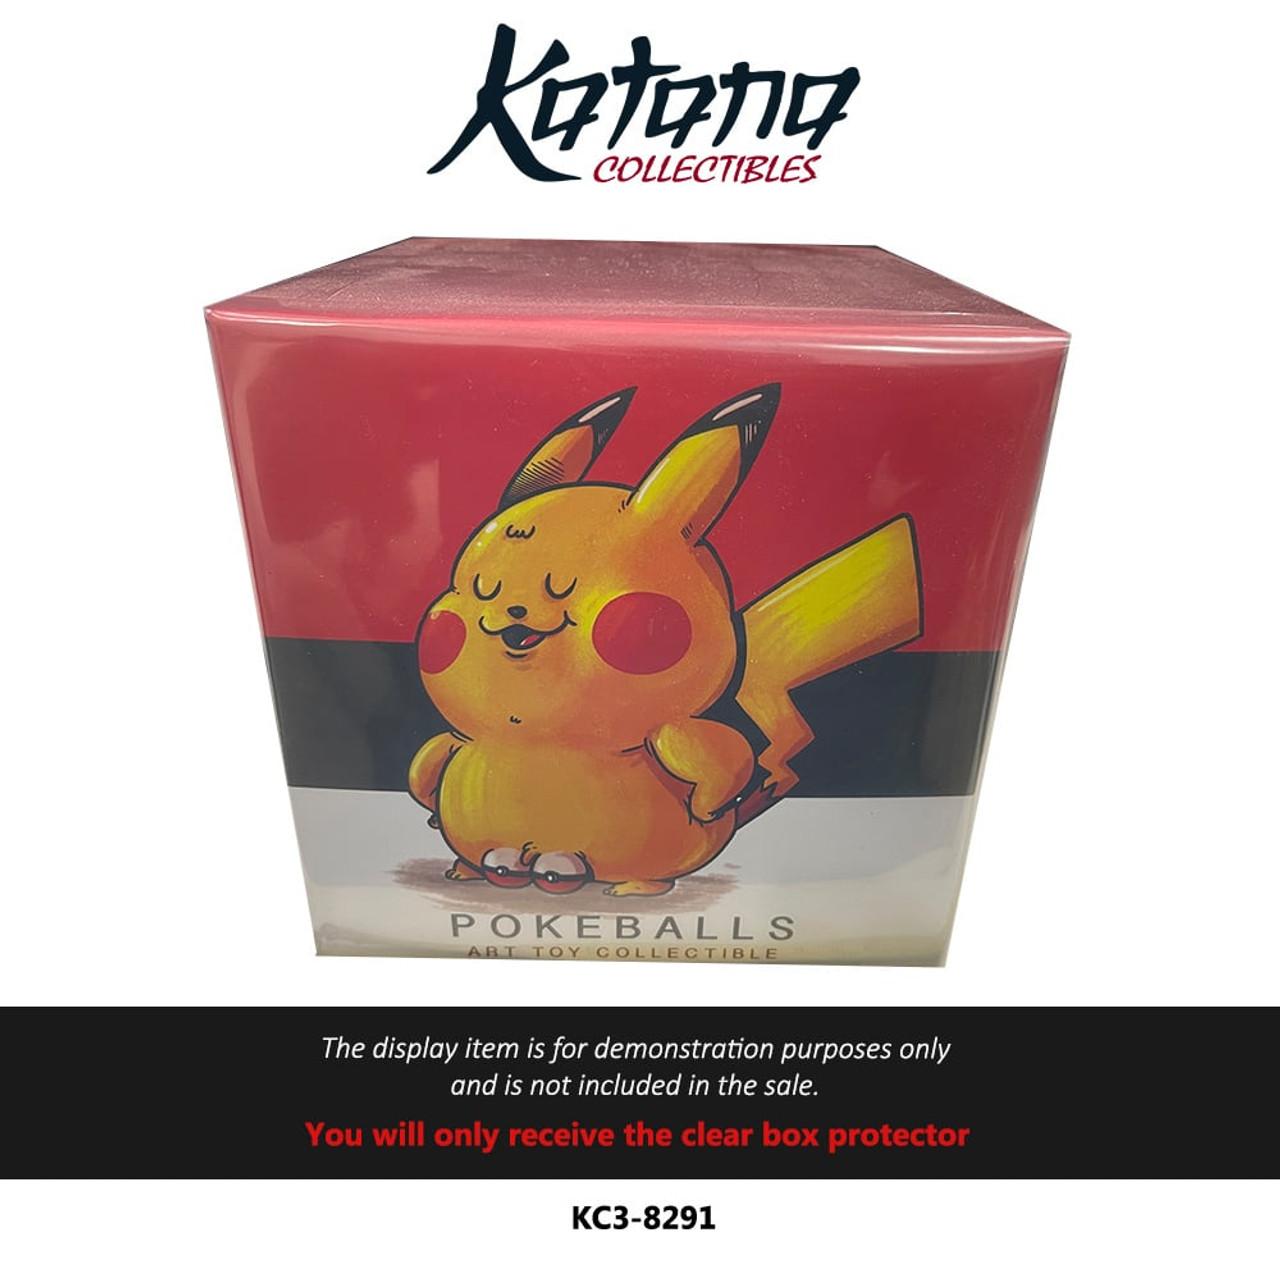 Katana Collectibles Protector For Pikachu Art Toy Collectable